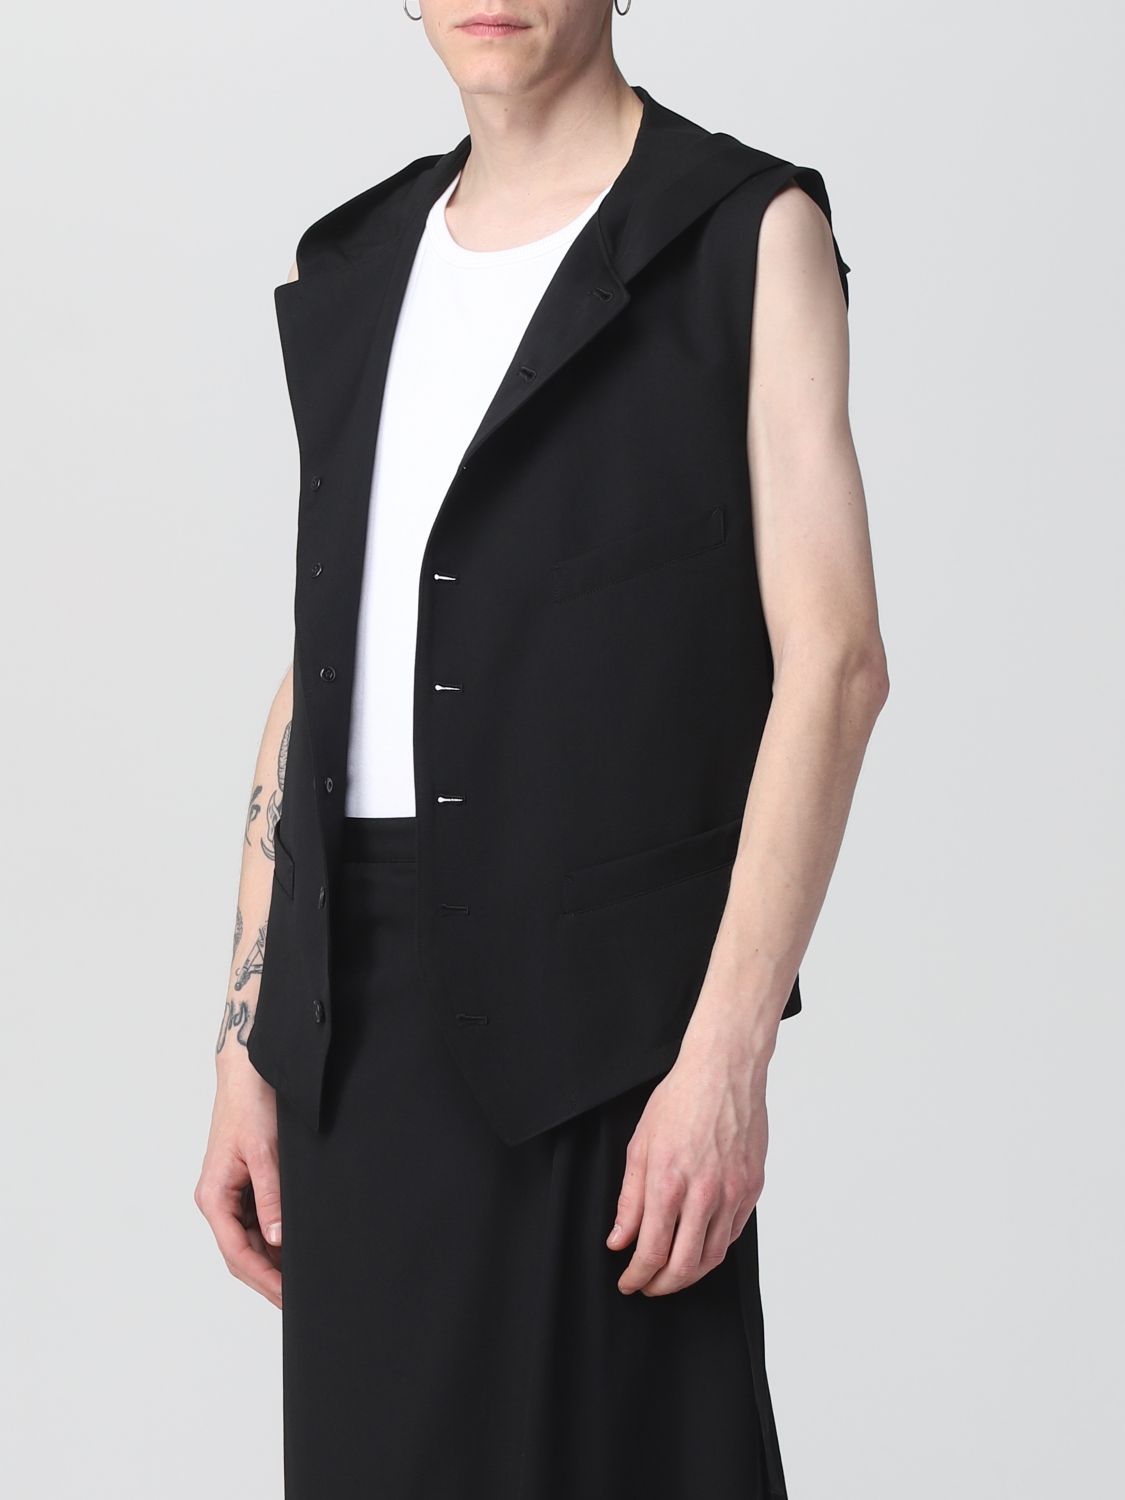 YOHJI YAMAMOTO: suit vest for man - Black | Yohji Yamamoto suit vest ...